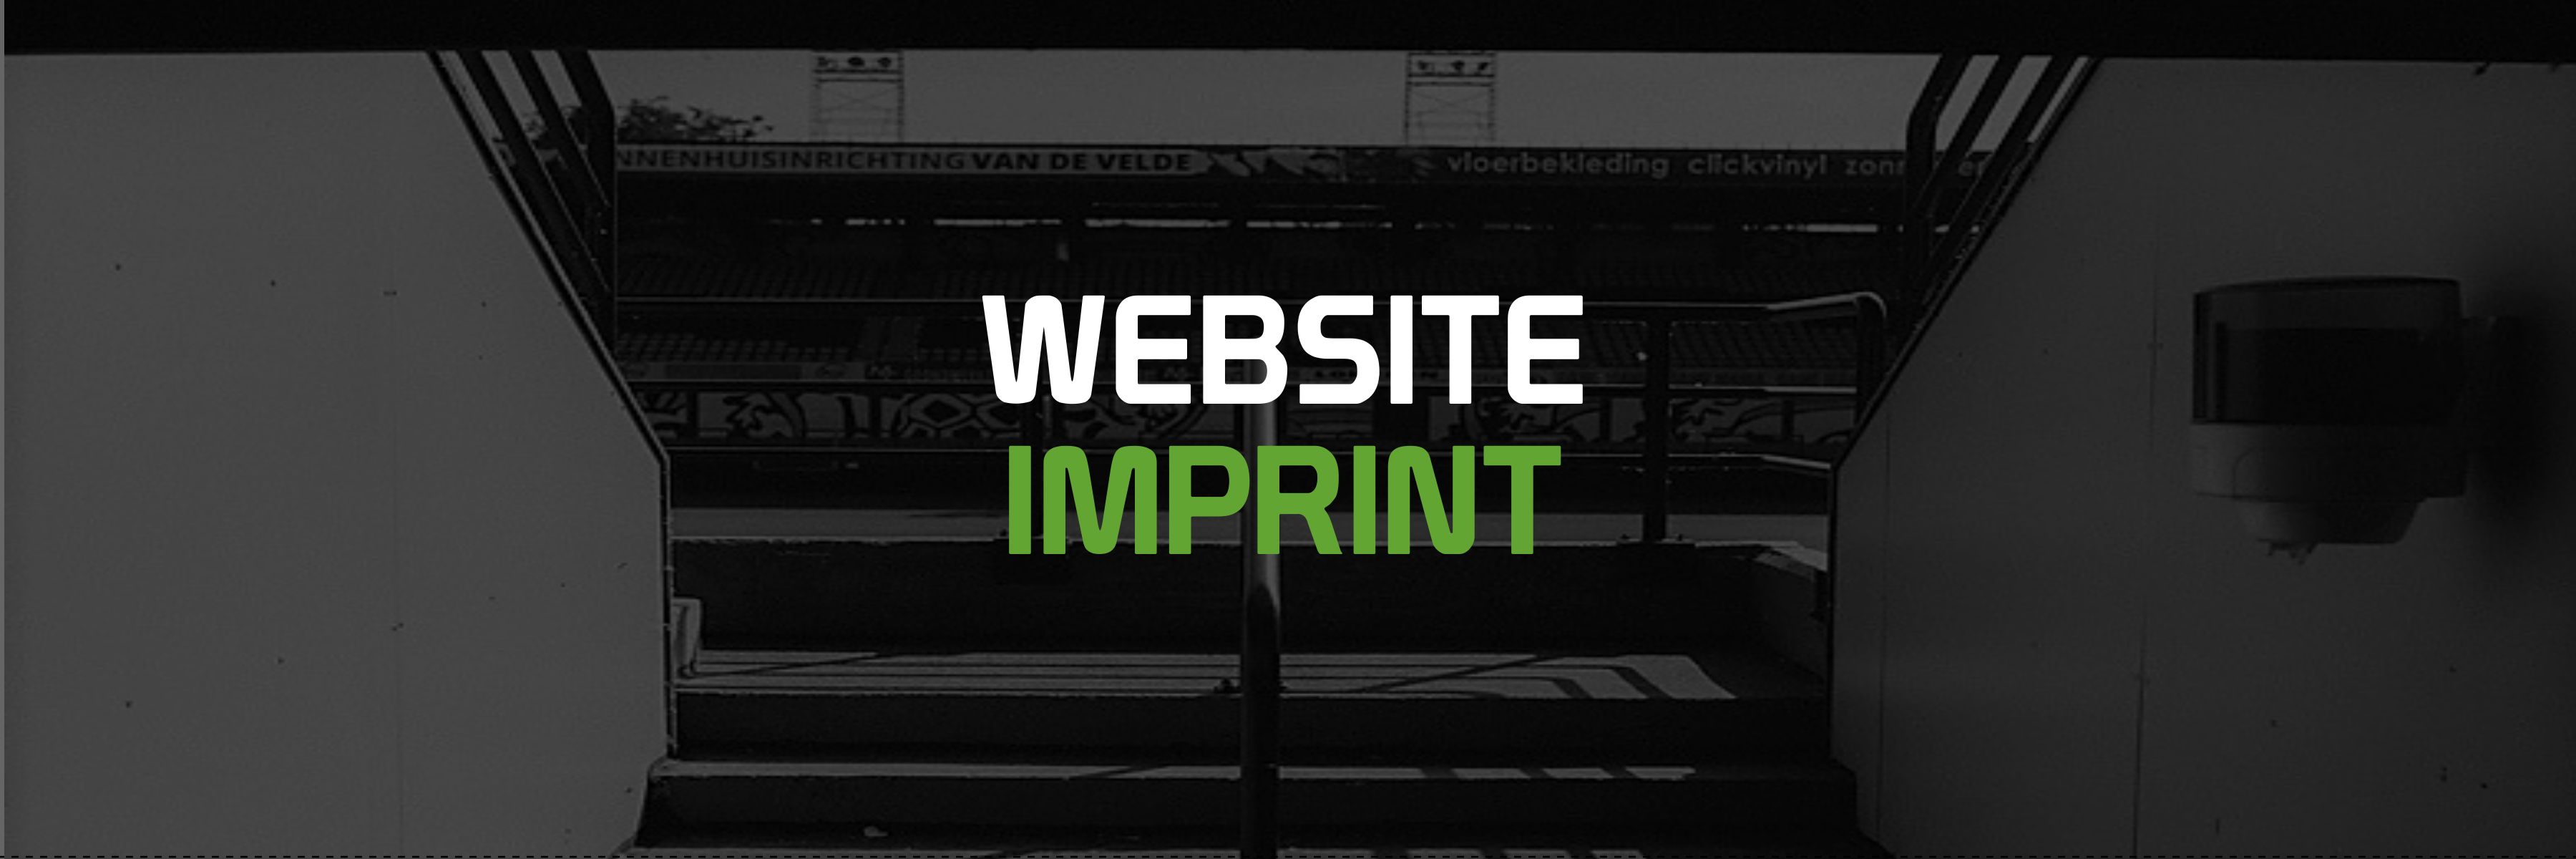 Website Imprint Banner